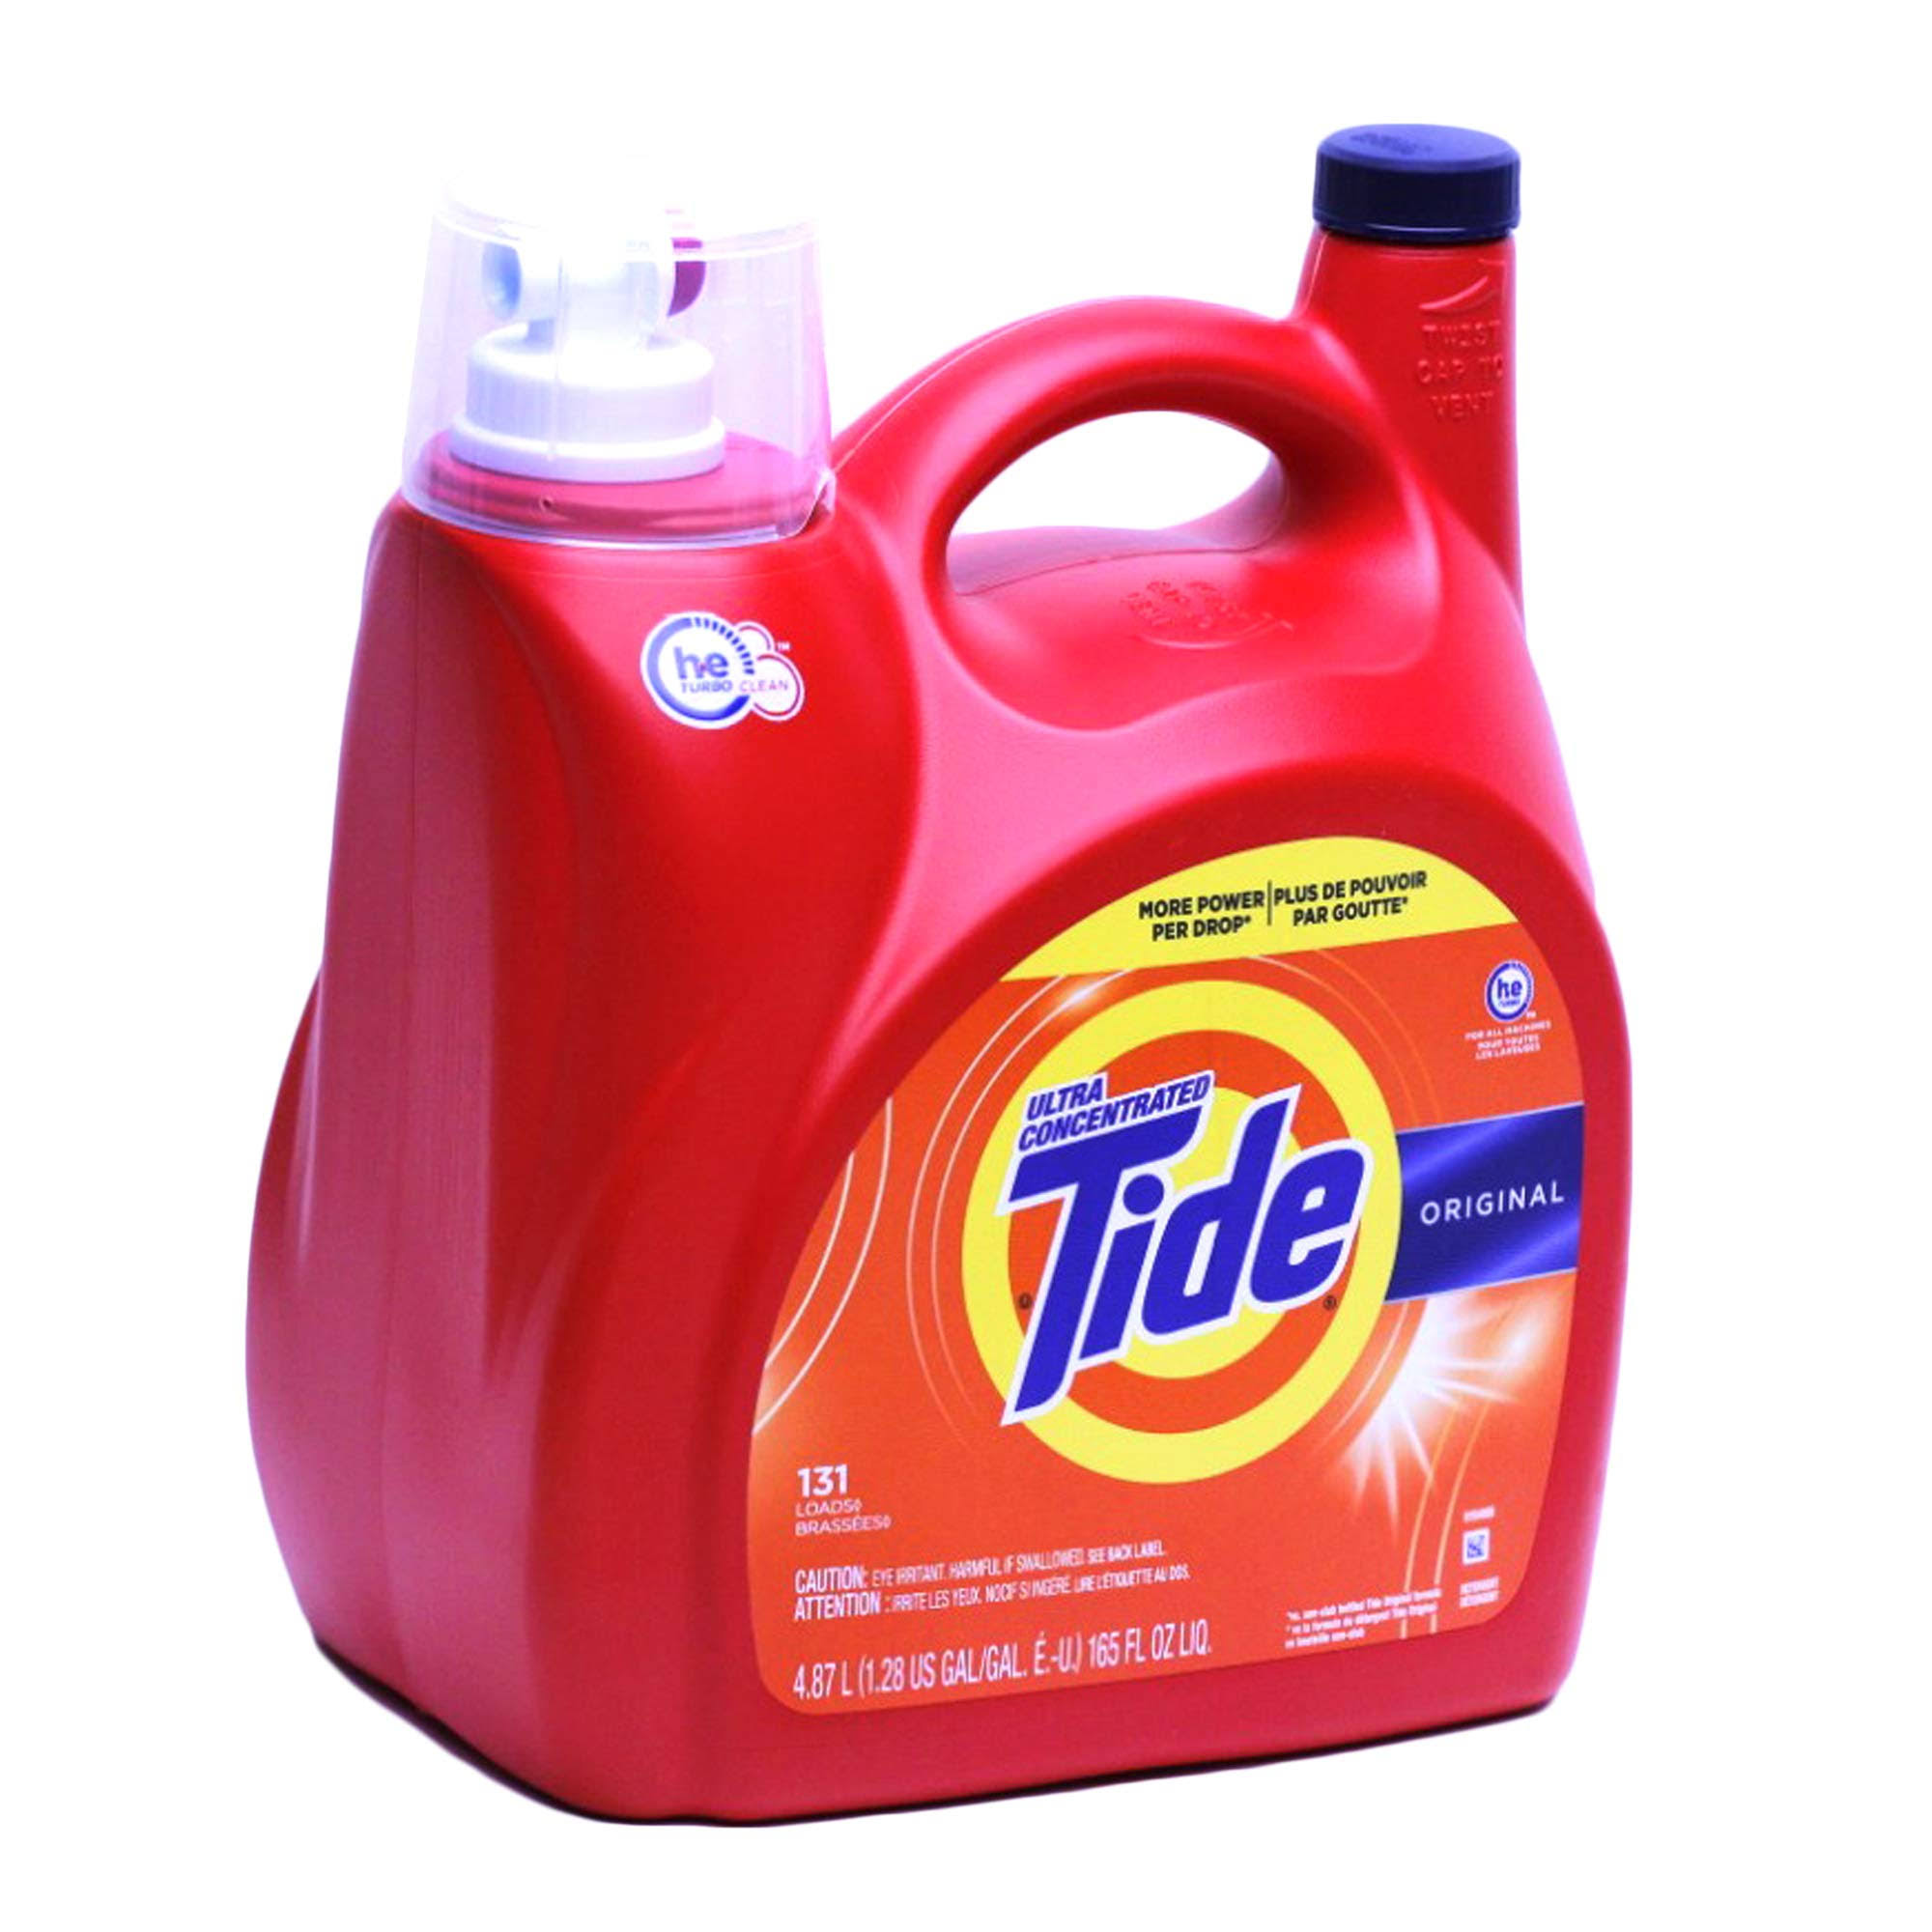 Tide High Efficiency, Ultra Concentrated Original Liquid Laundry Detergent 4.87 L/165 FL oz - 131 Loads